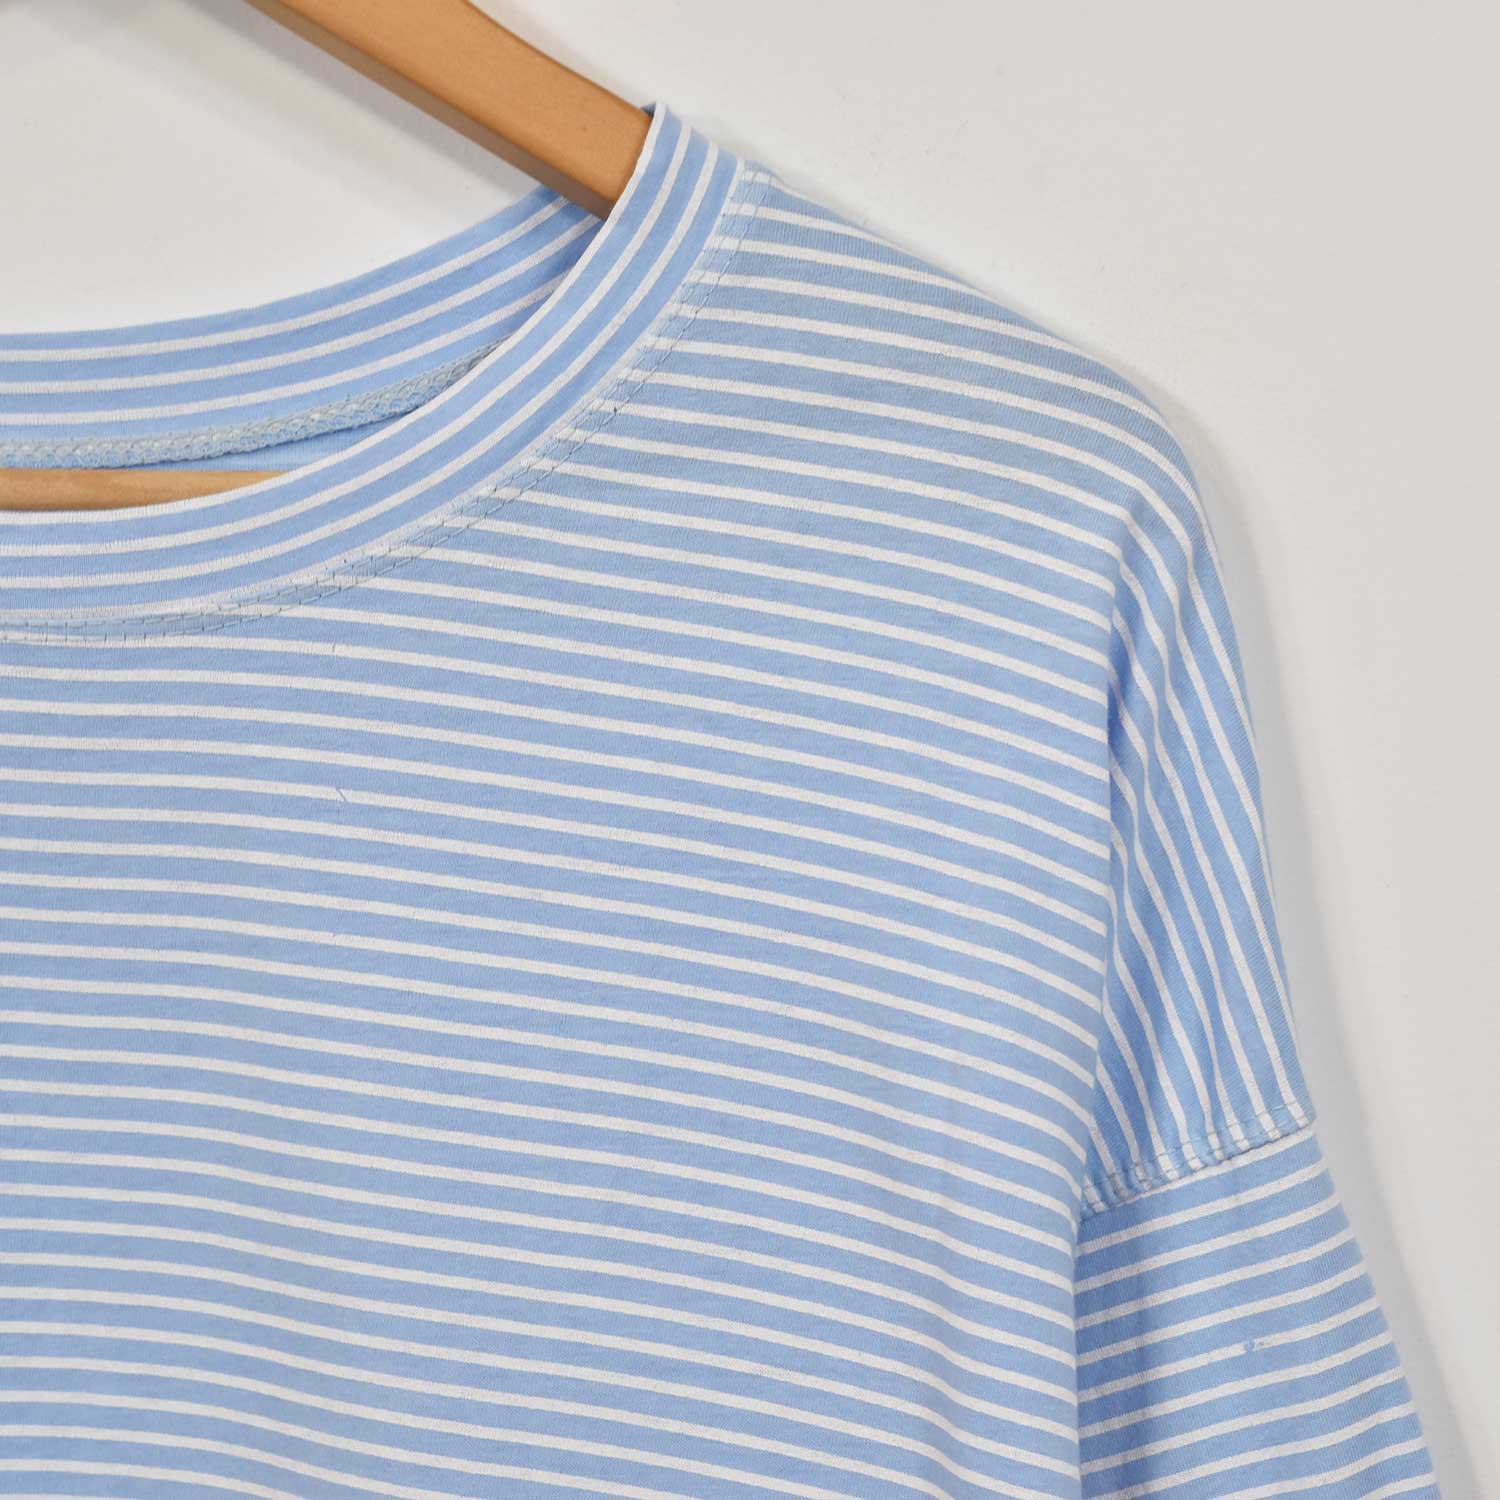 Blue light cotton stripes t-shirt